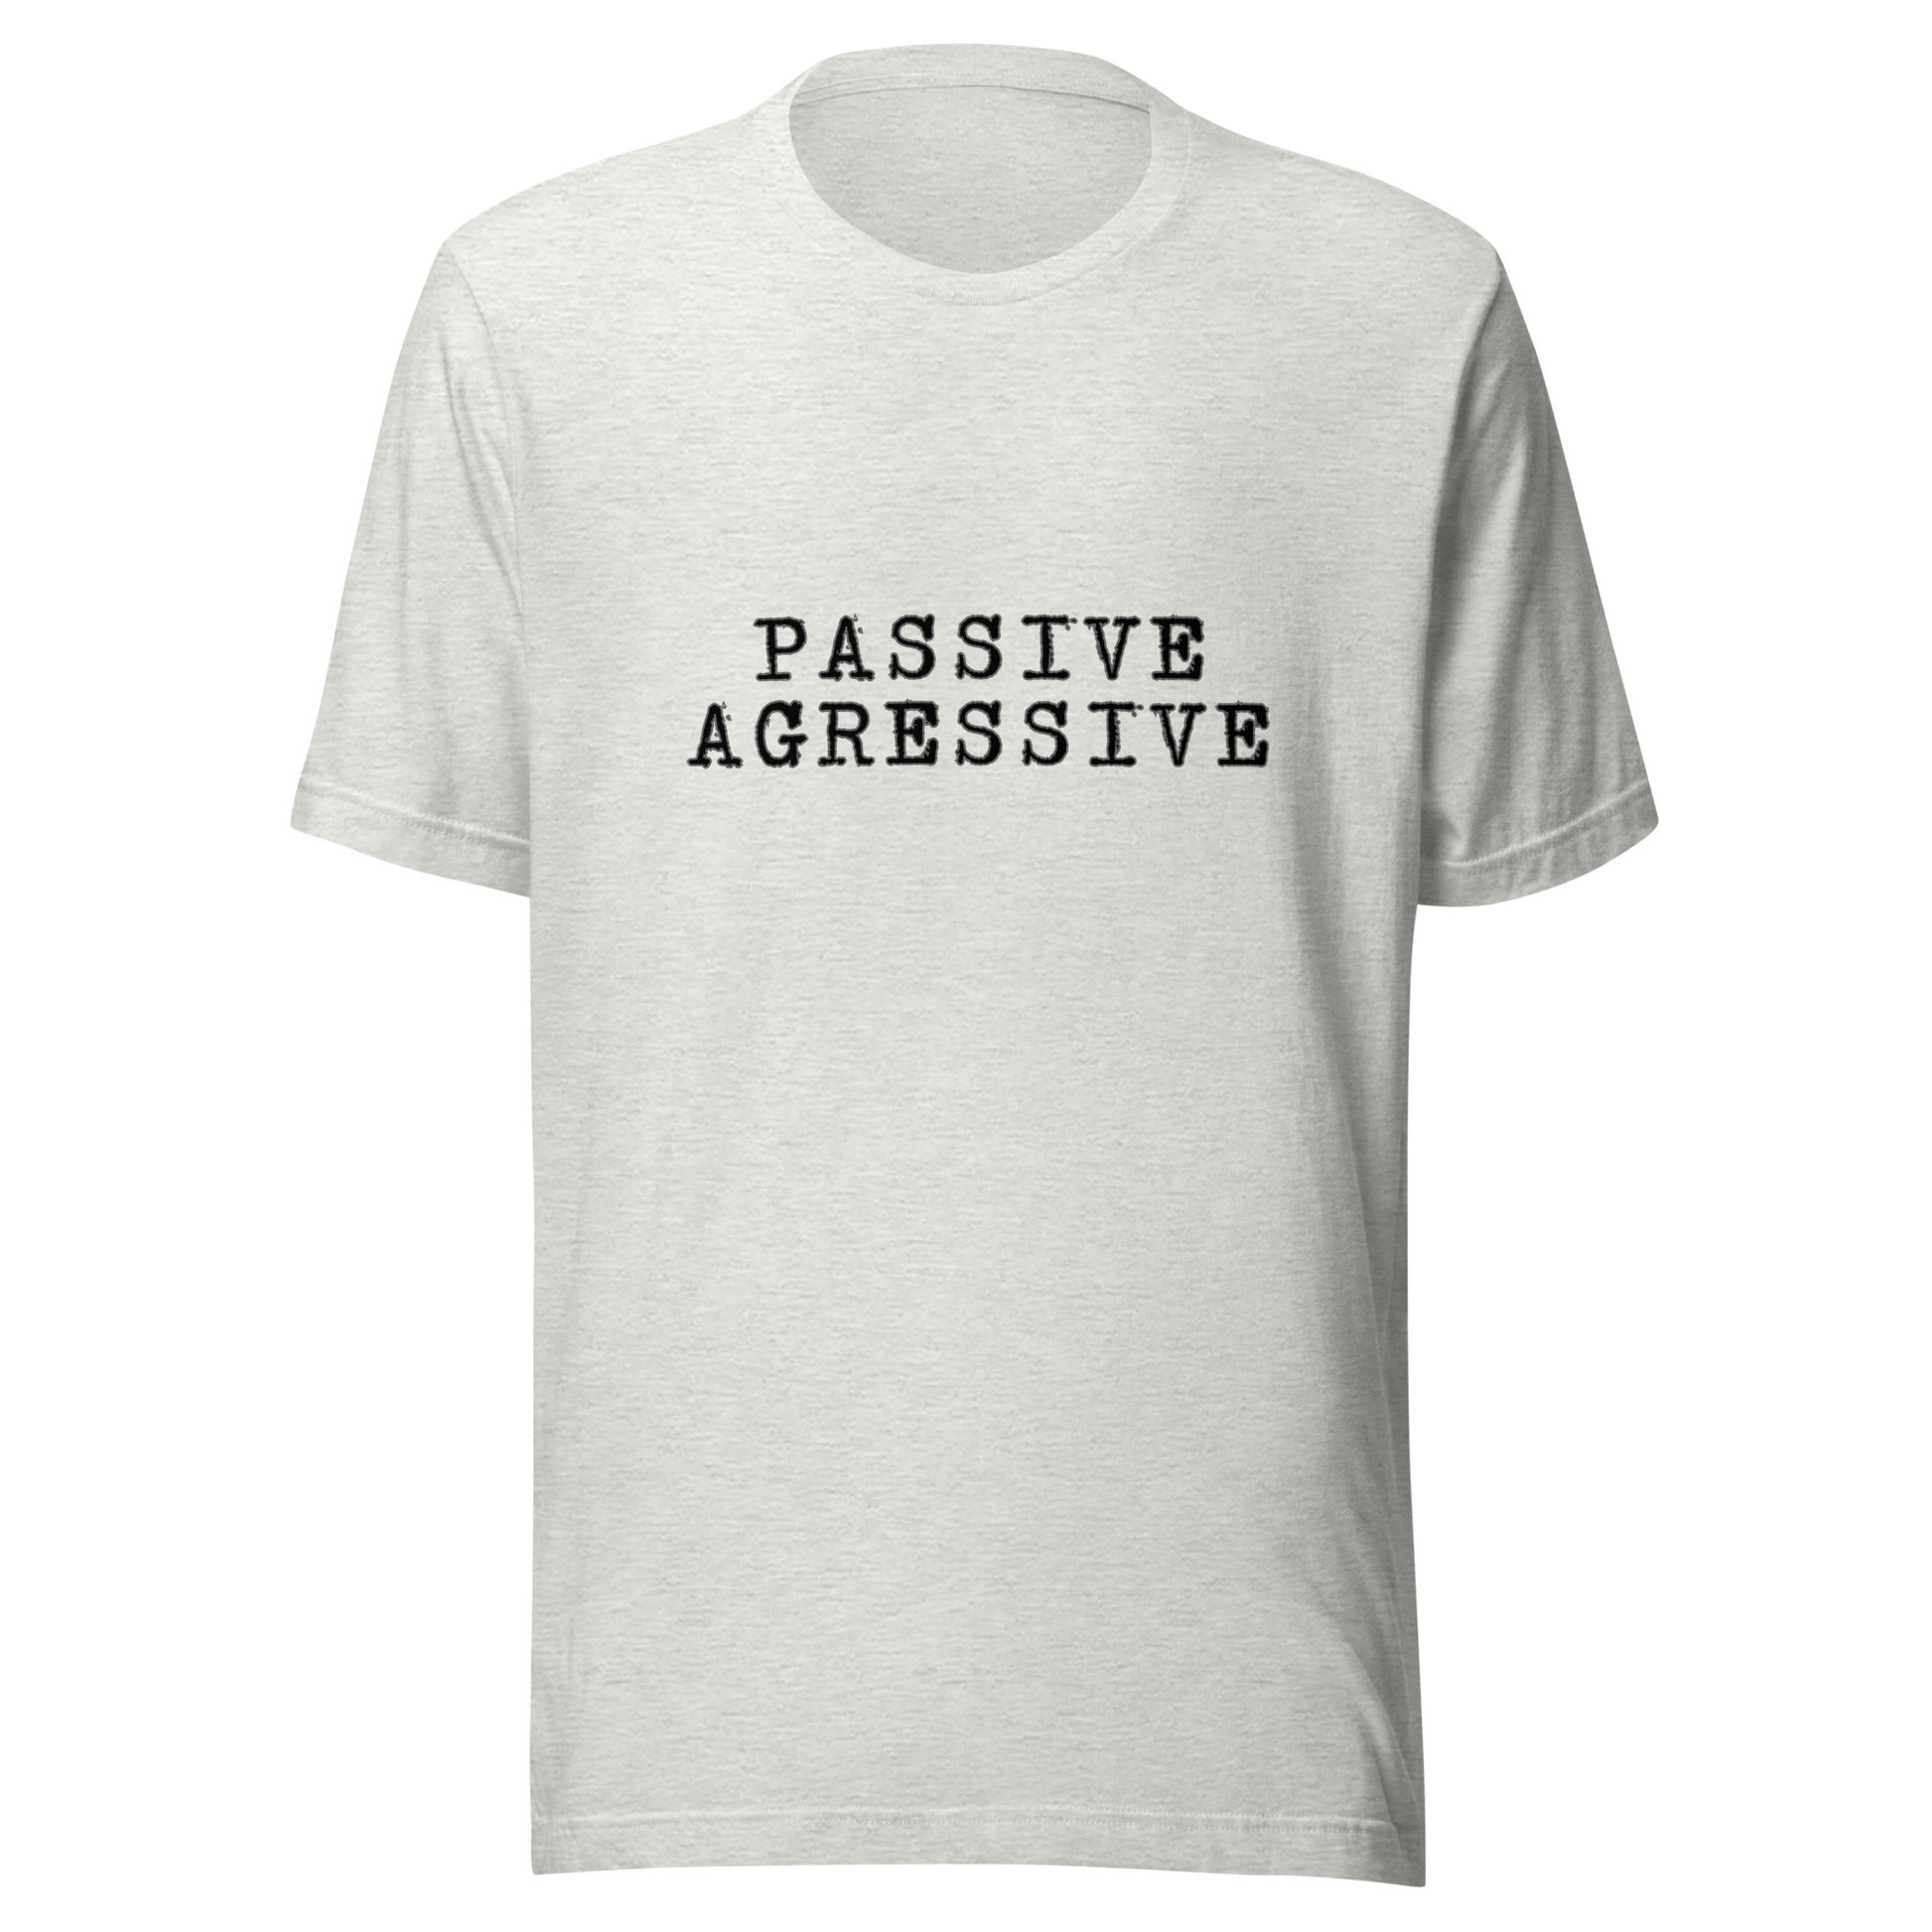 passive aggressive t-shirt in white - gaslit apparel